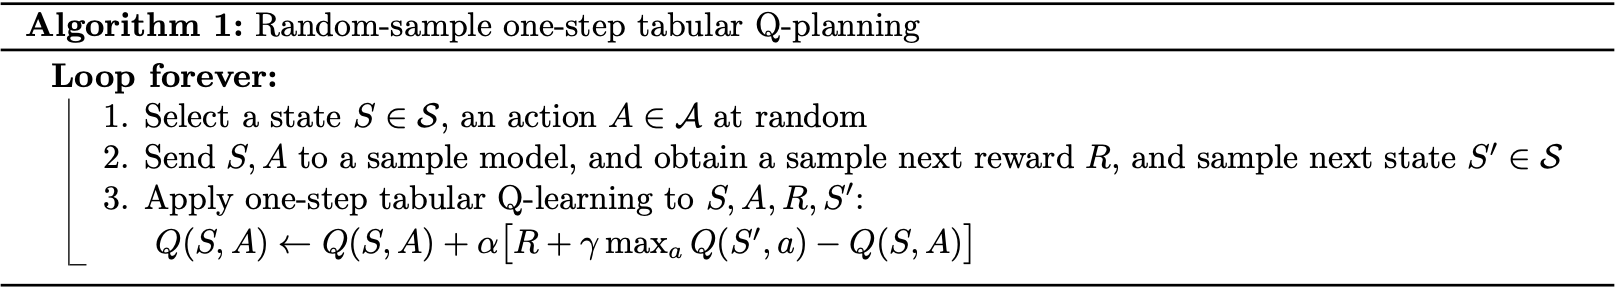 Random-sample one-step Q-planning